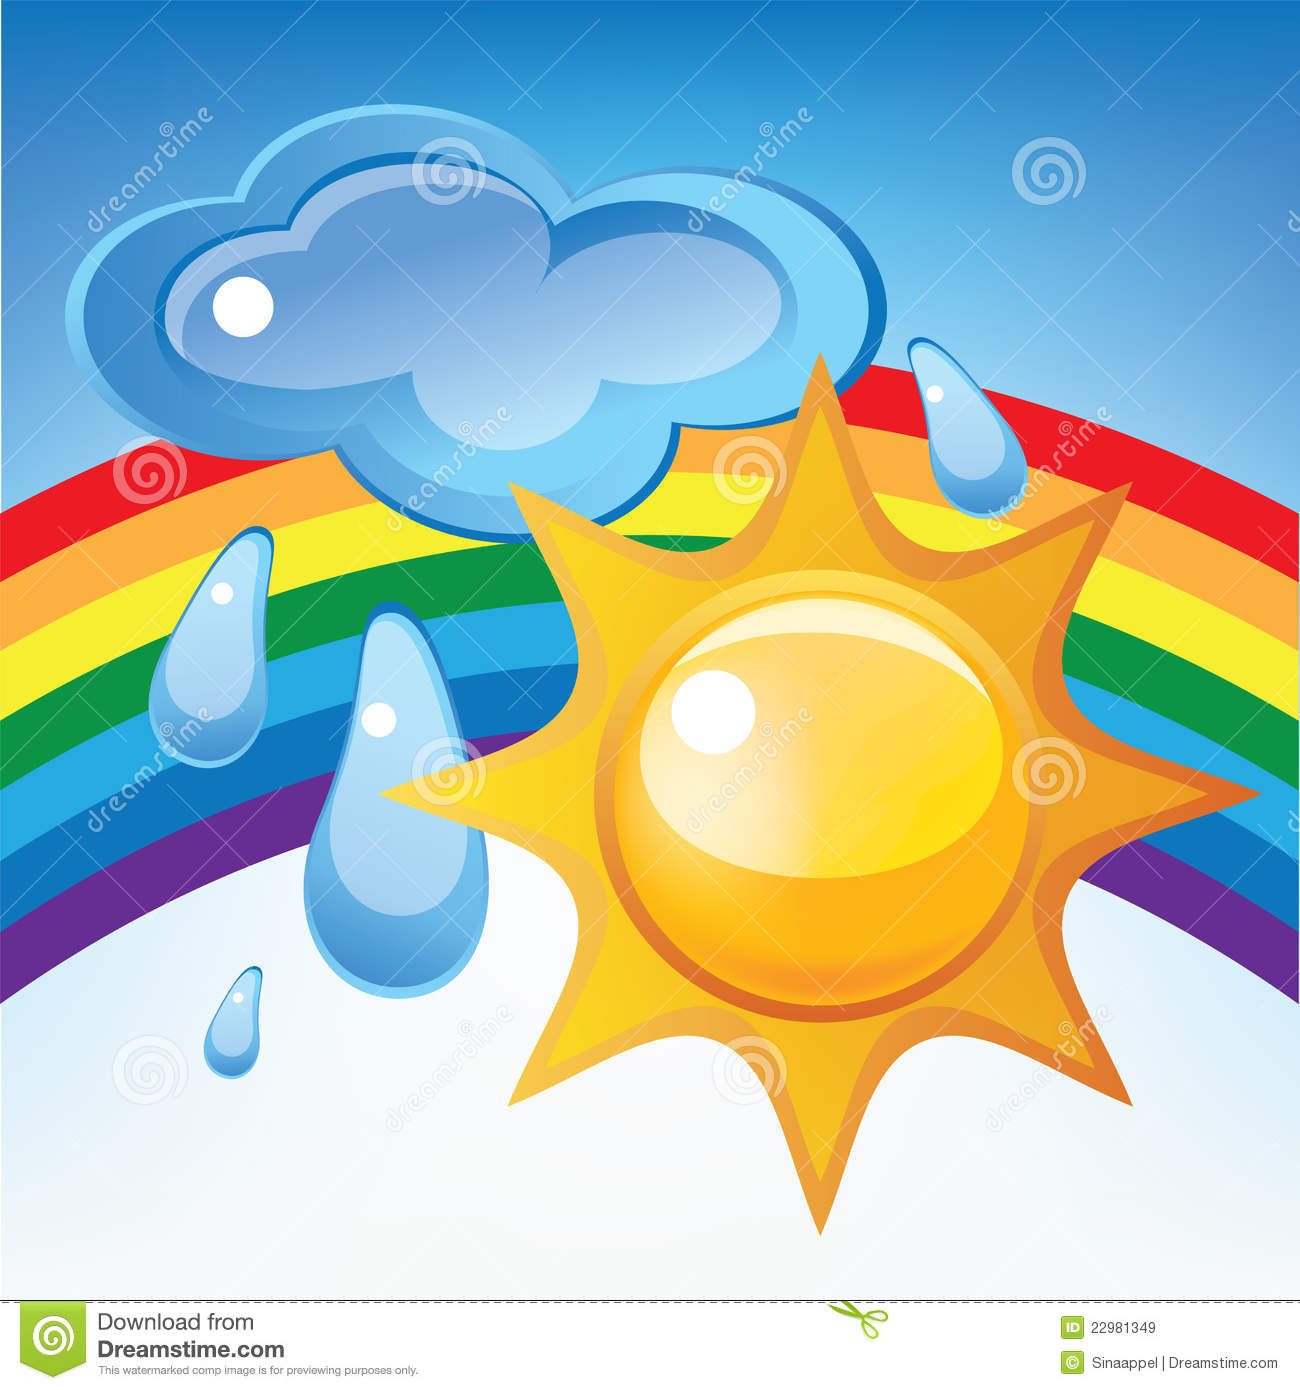 Sun Cloud Rain And Rainbow Royalty Free Stock Images   Image    